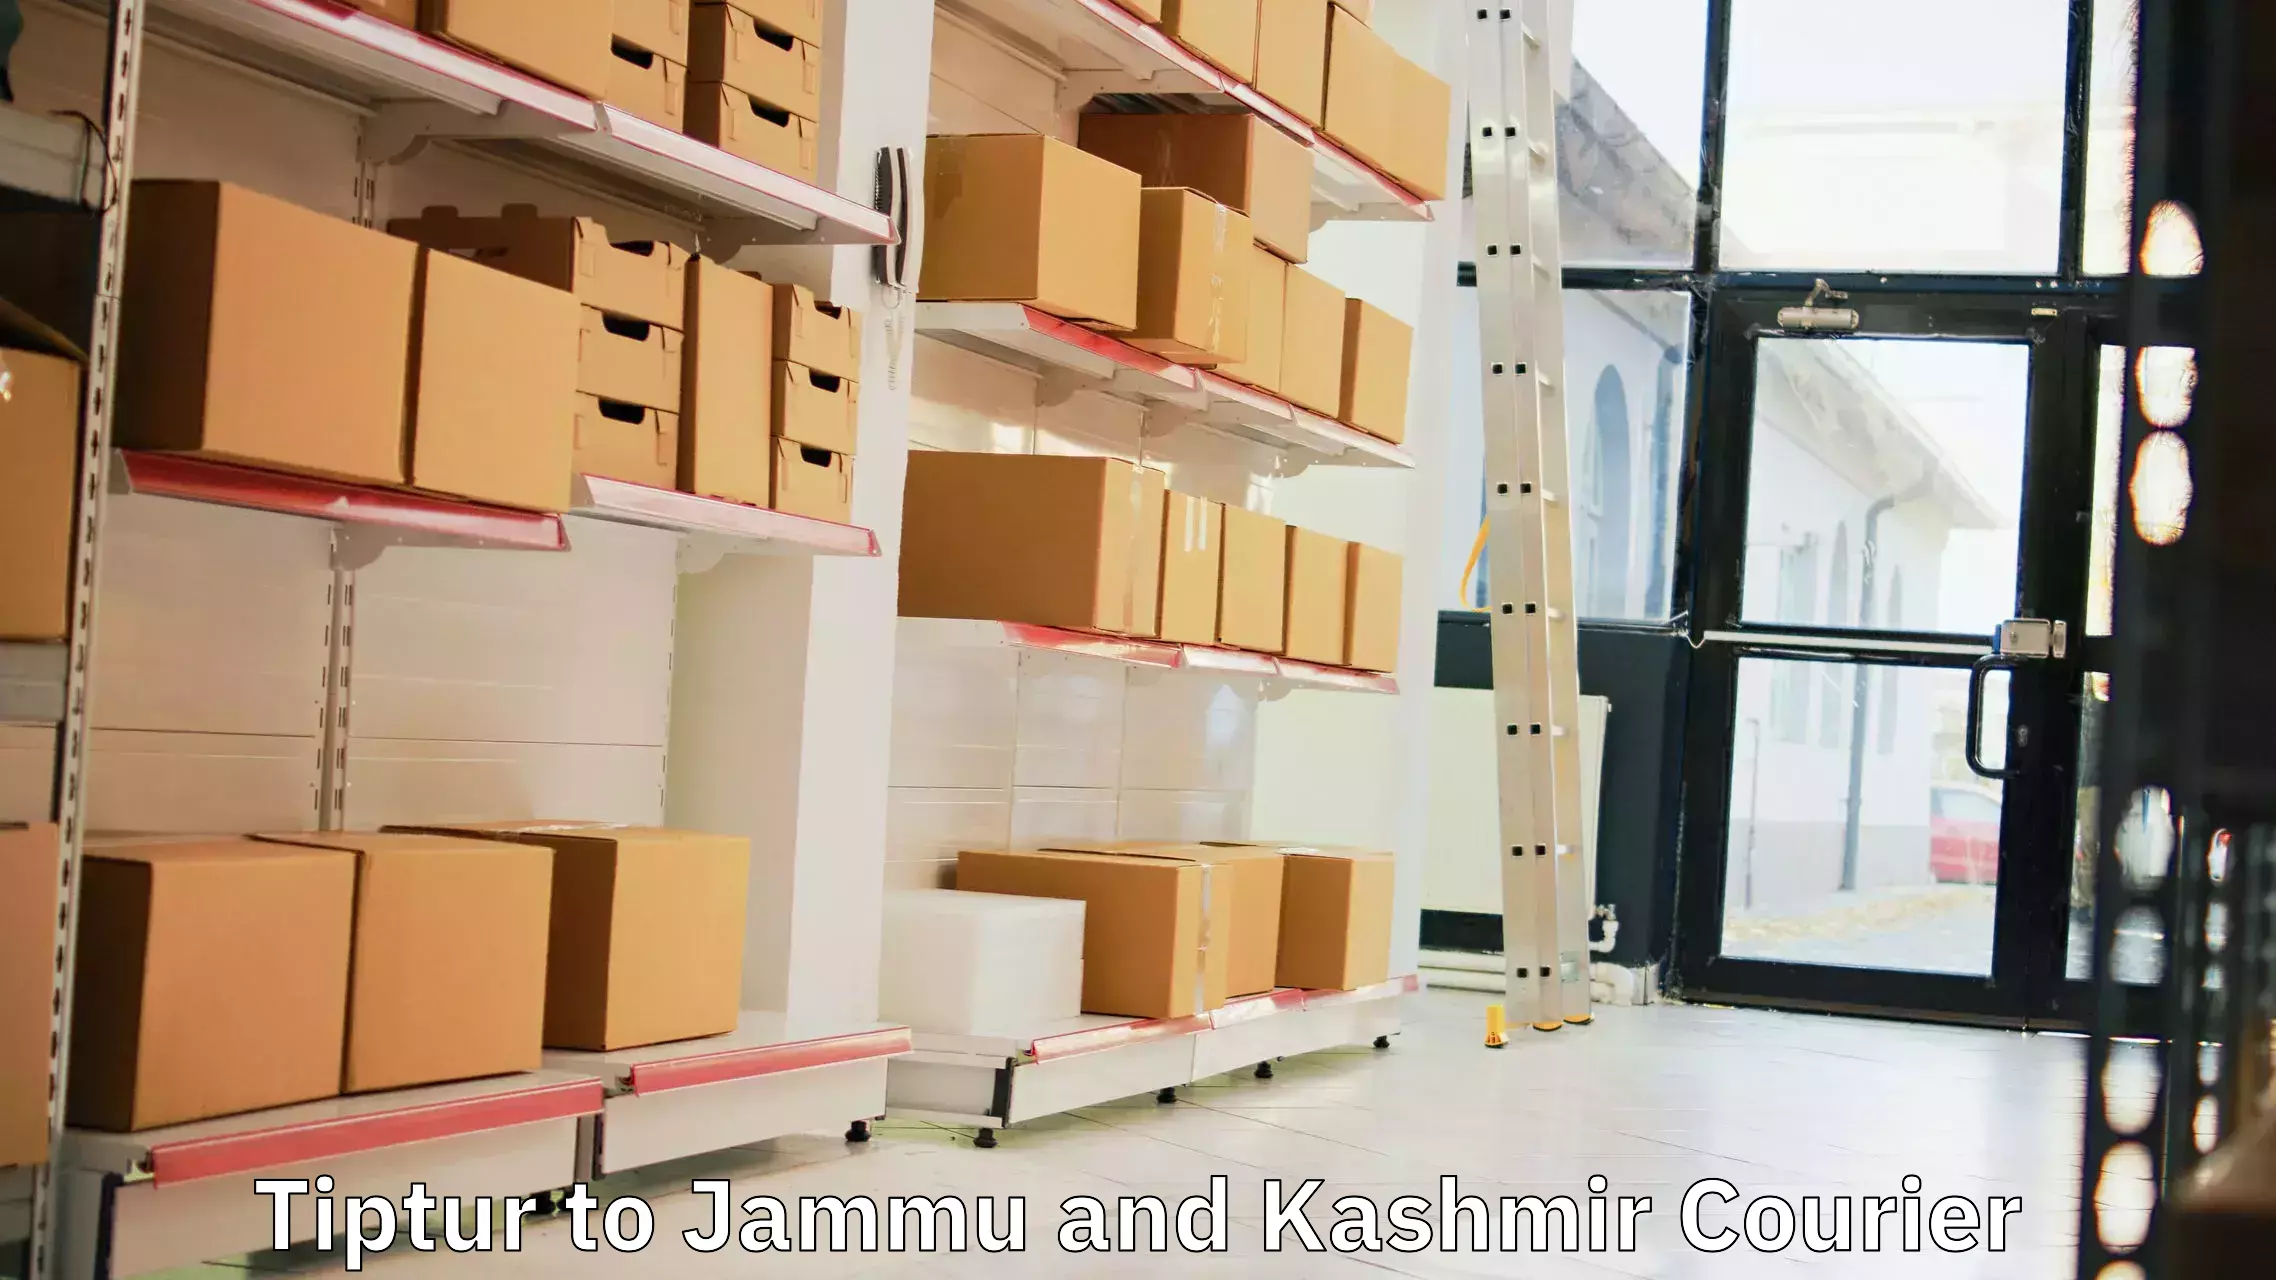 Professional courier handling Tiptur to Jammu and Kashmir